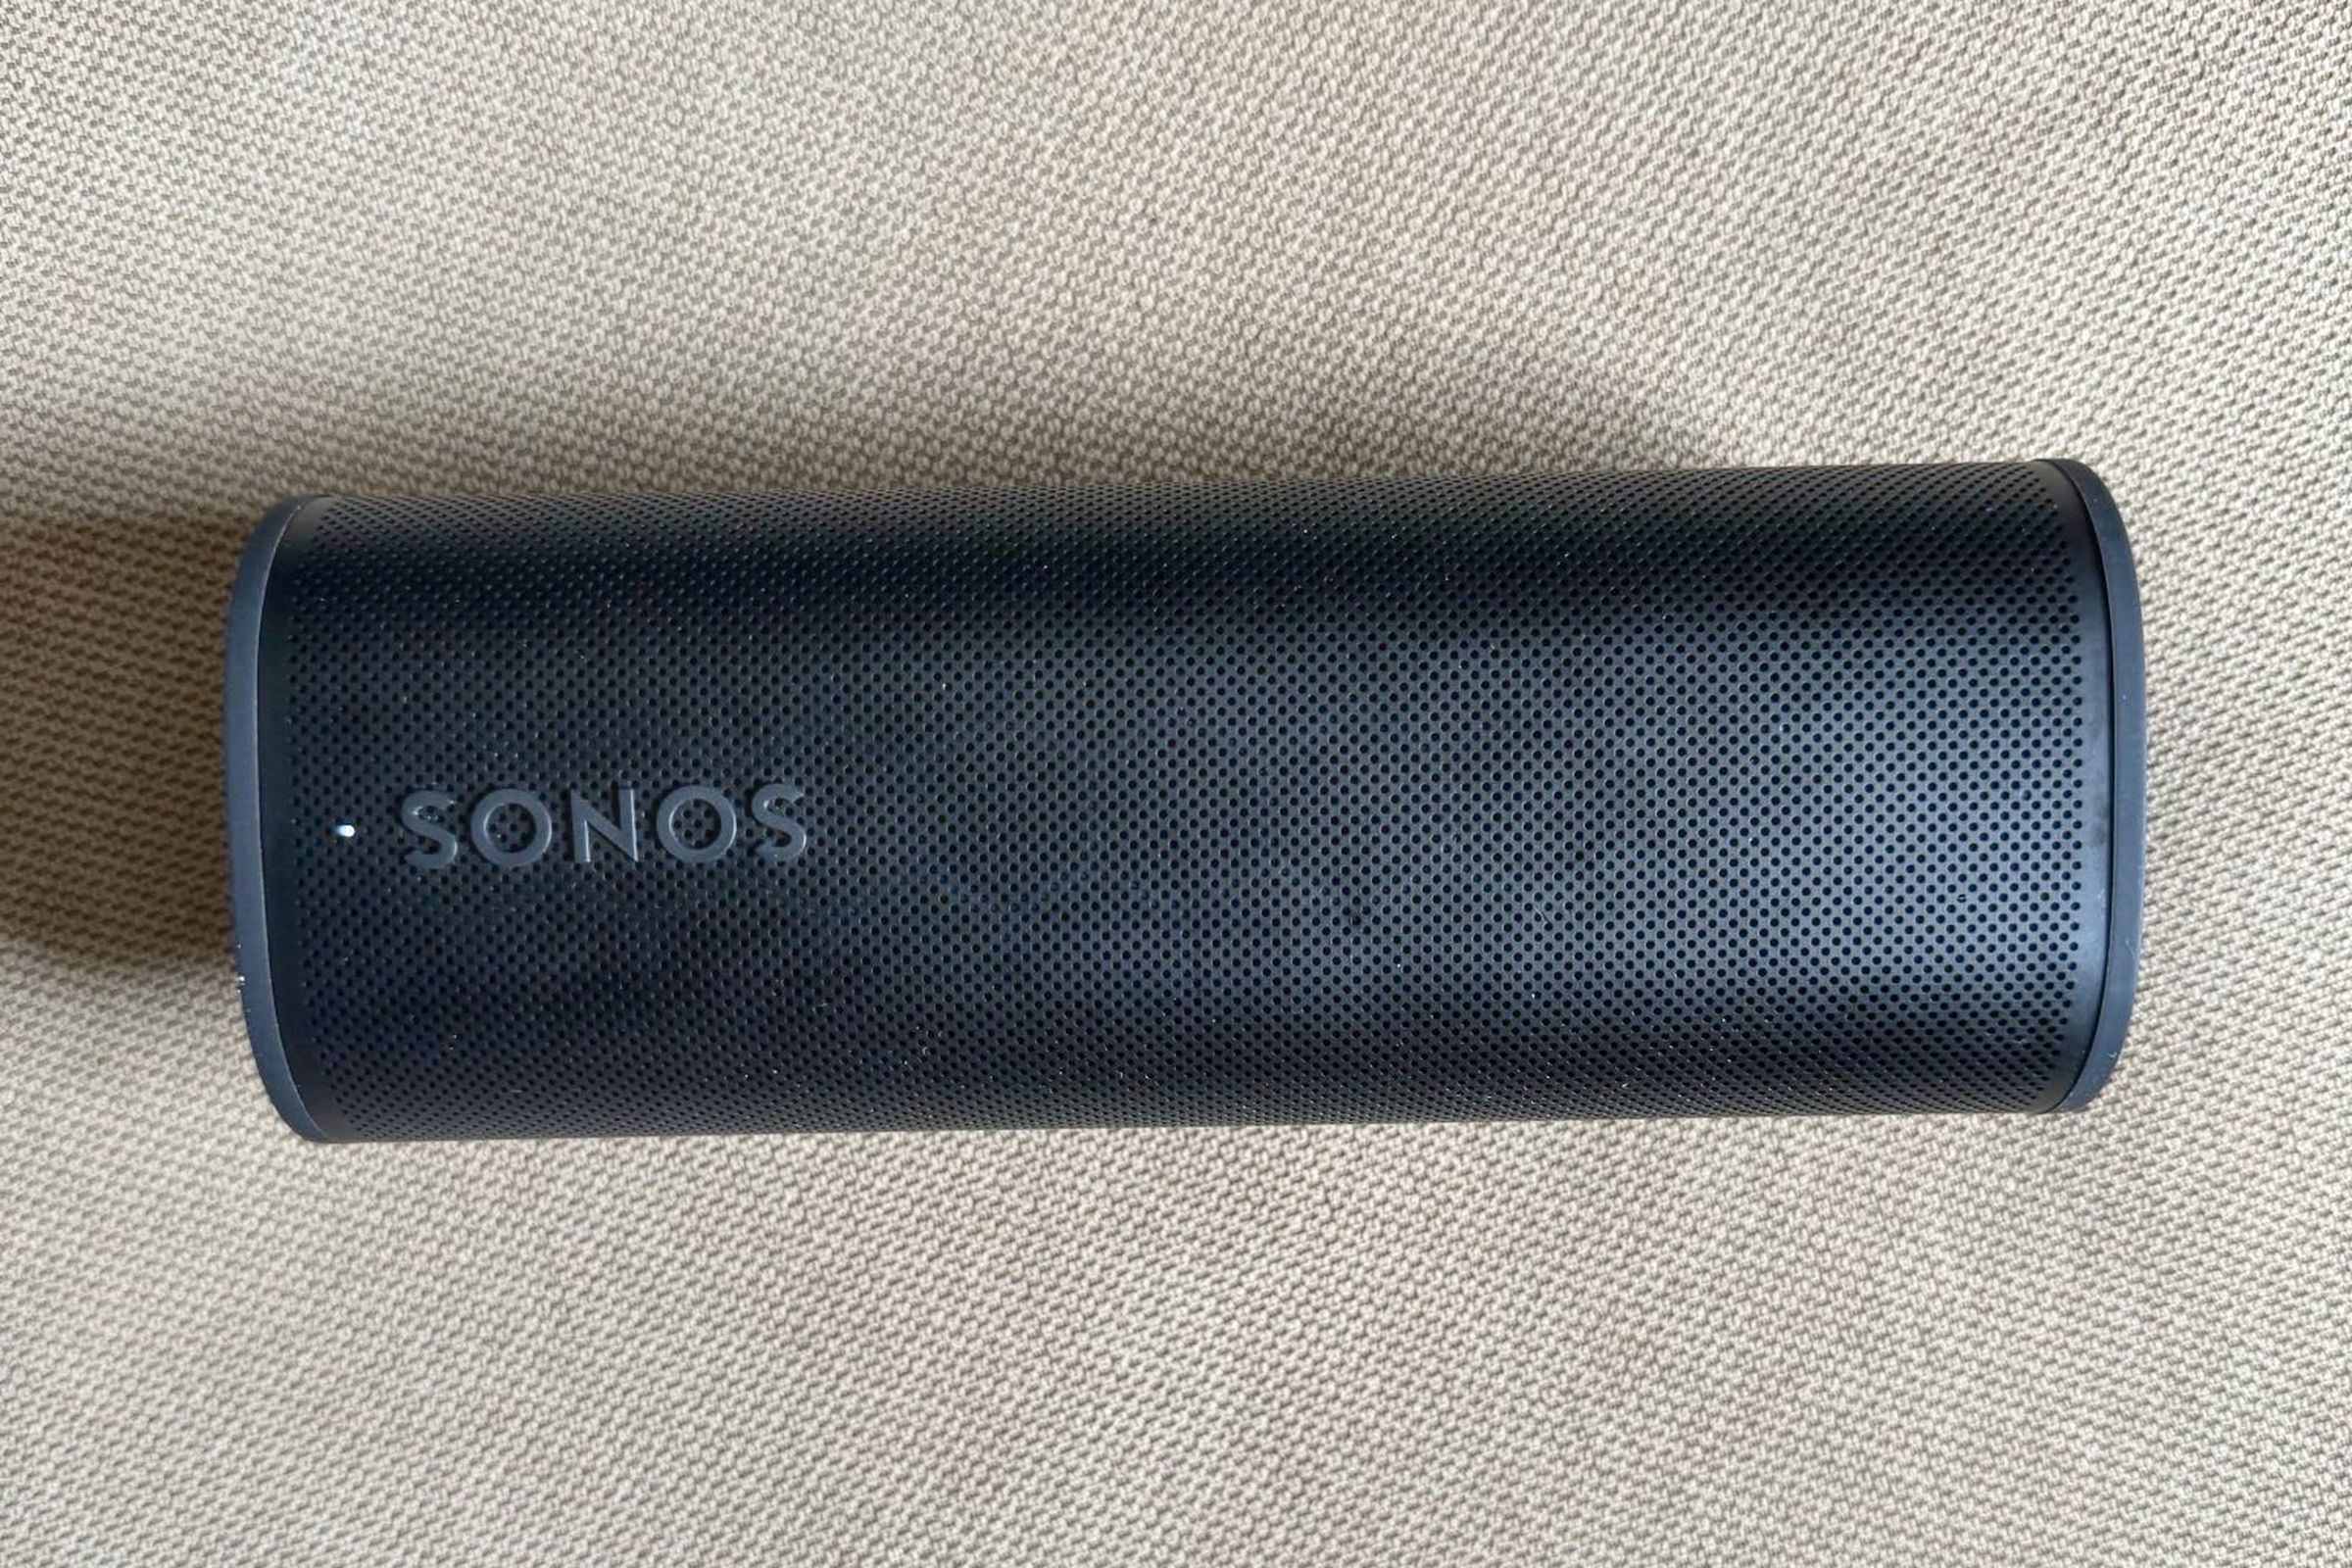 A photo of Sonos’ upcoming Roam 2 speaker in black.